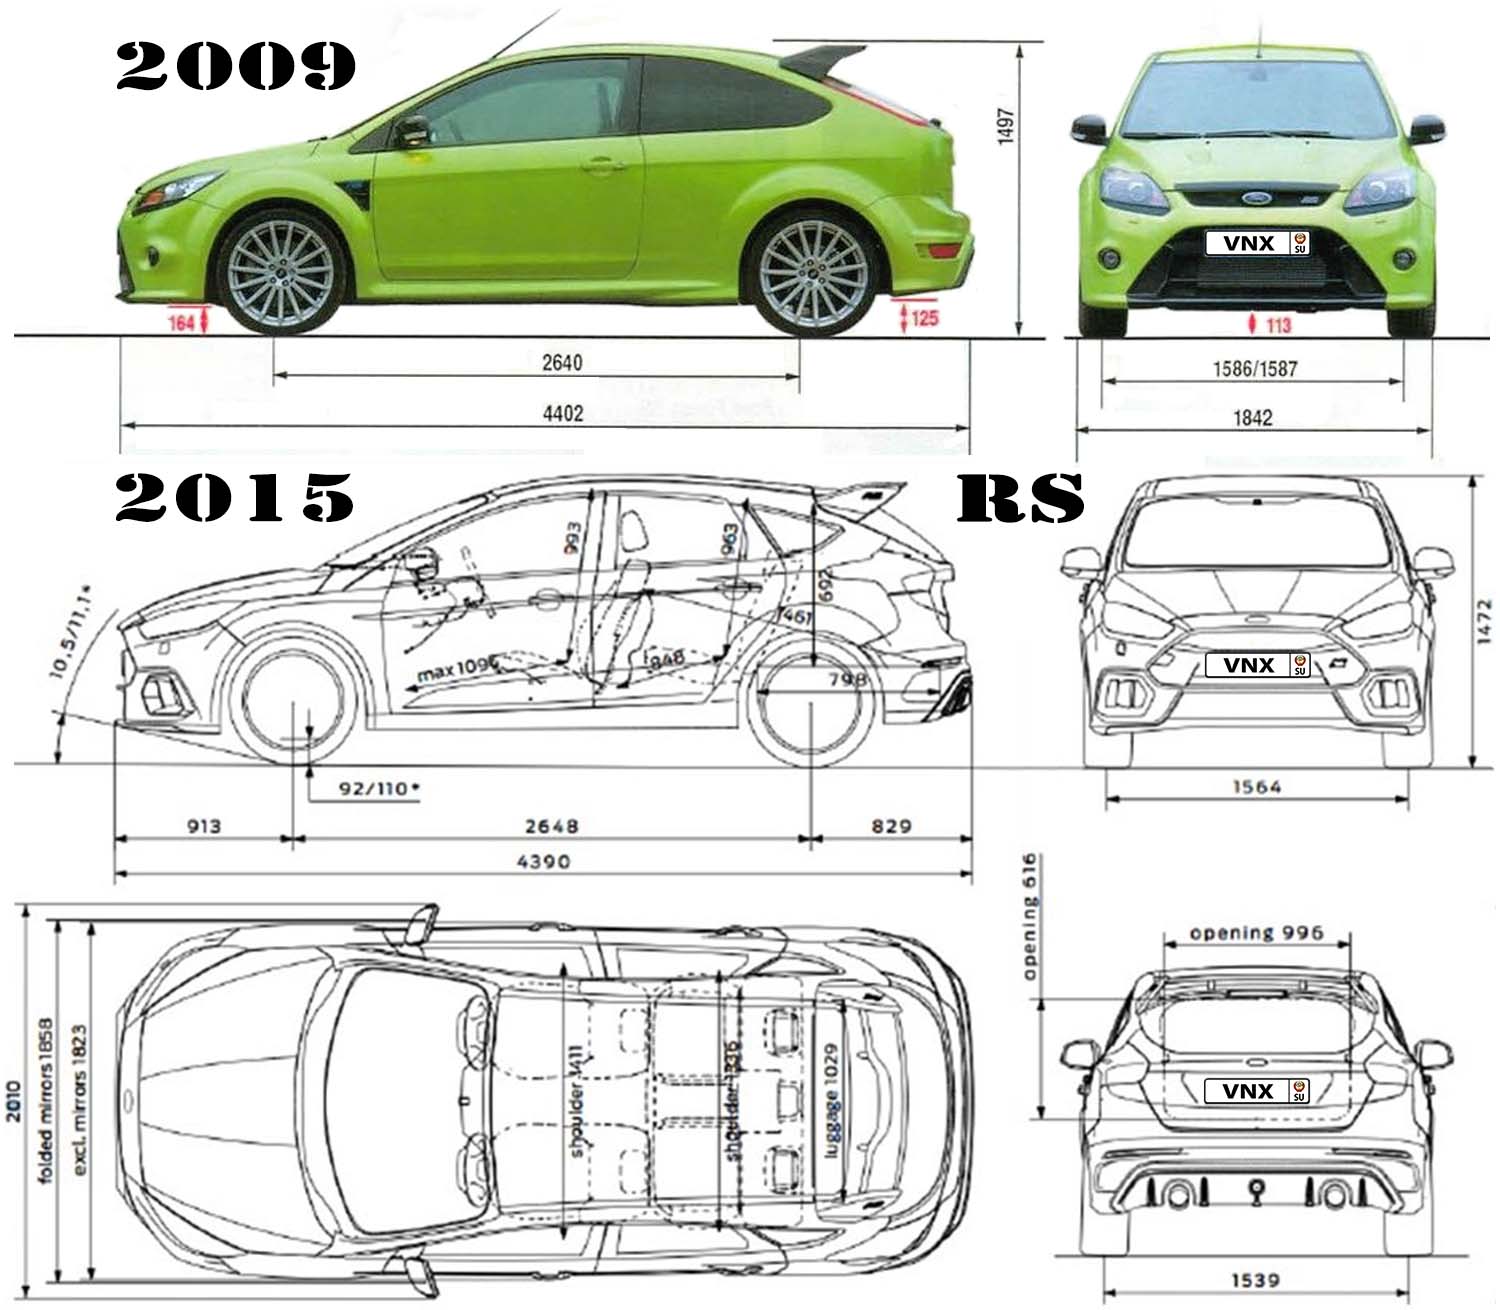 Габаритные размеры Форд Фокус РС 2009/2015 (dimensions Ford Focus RS)